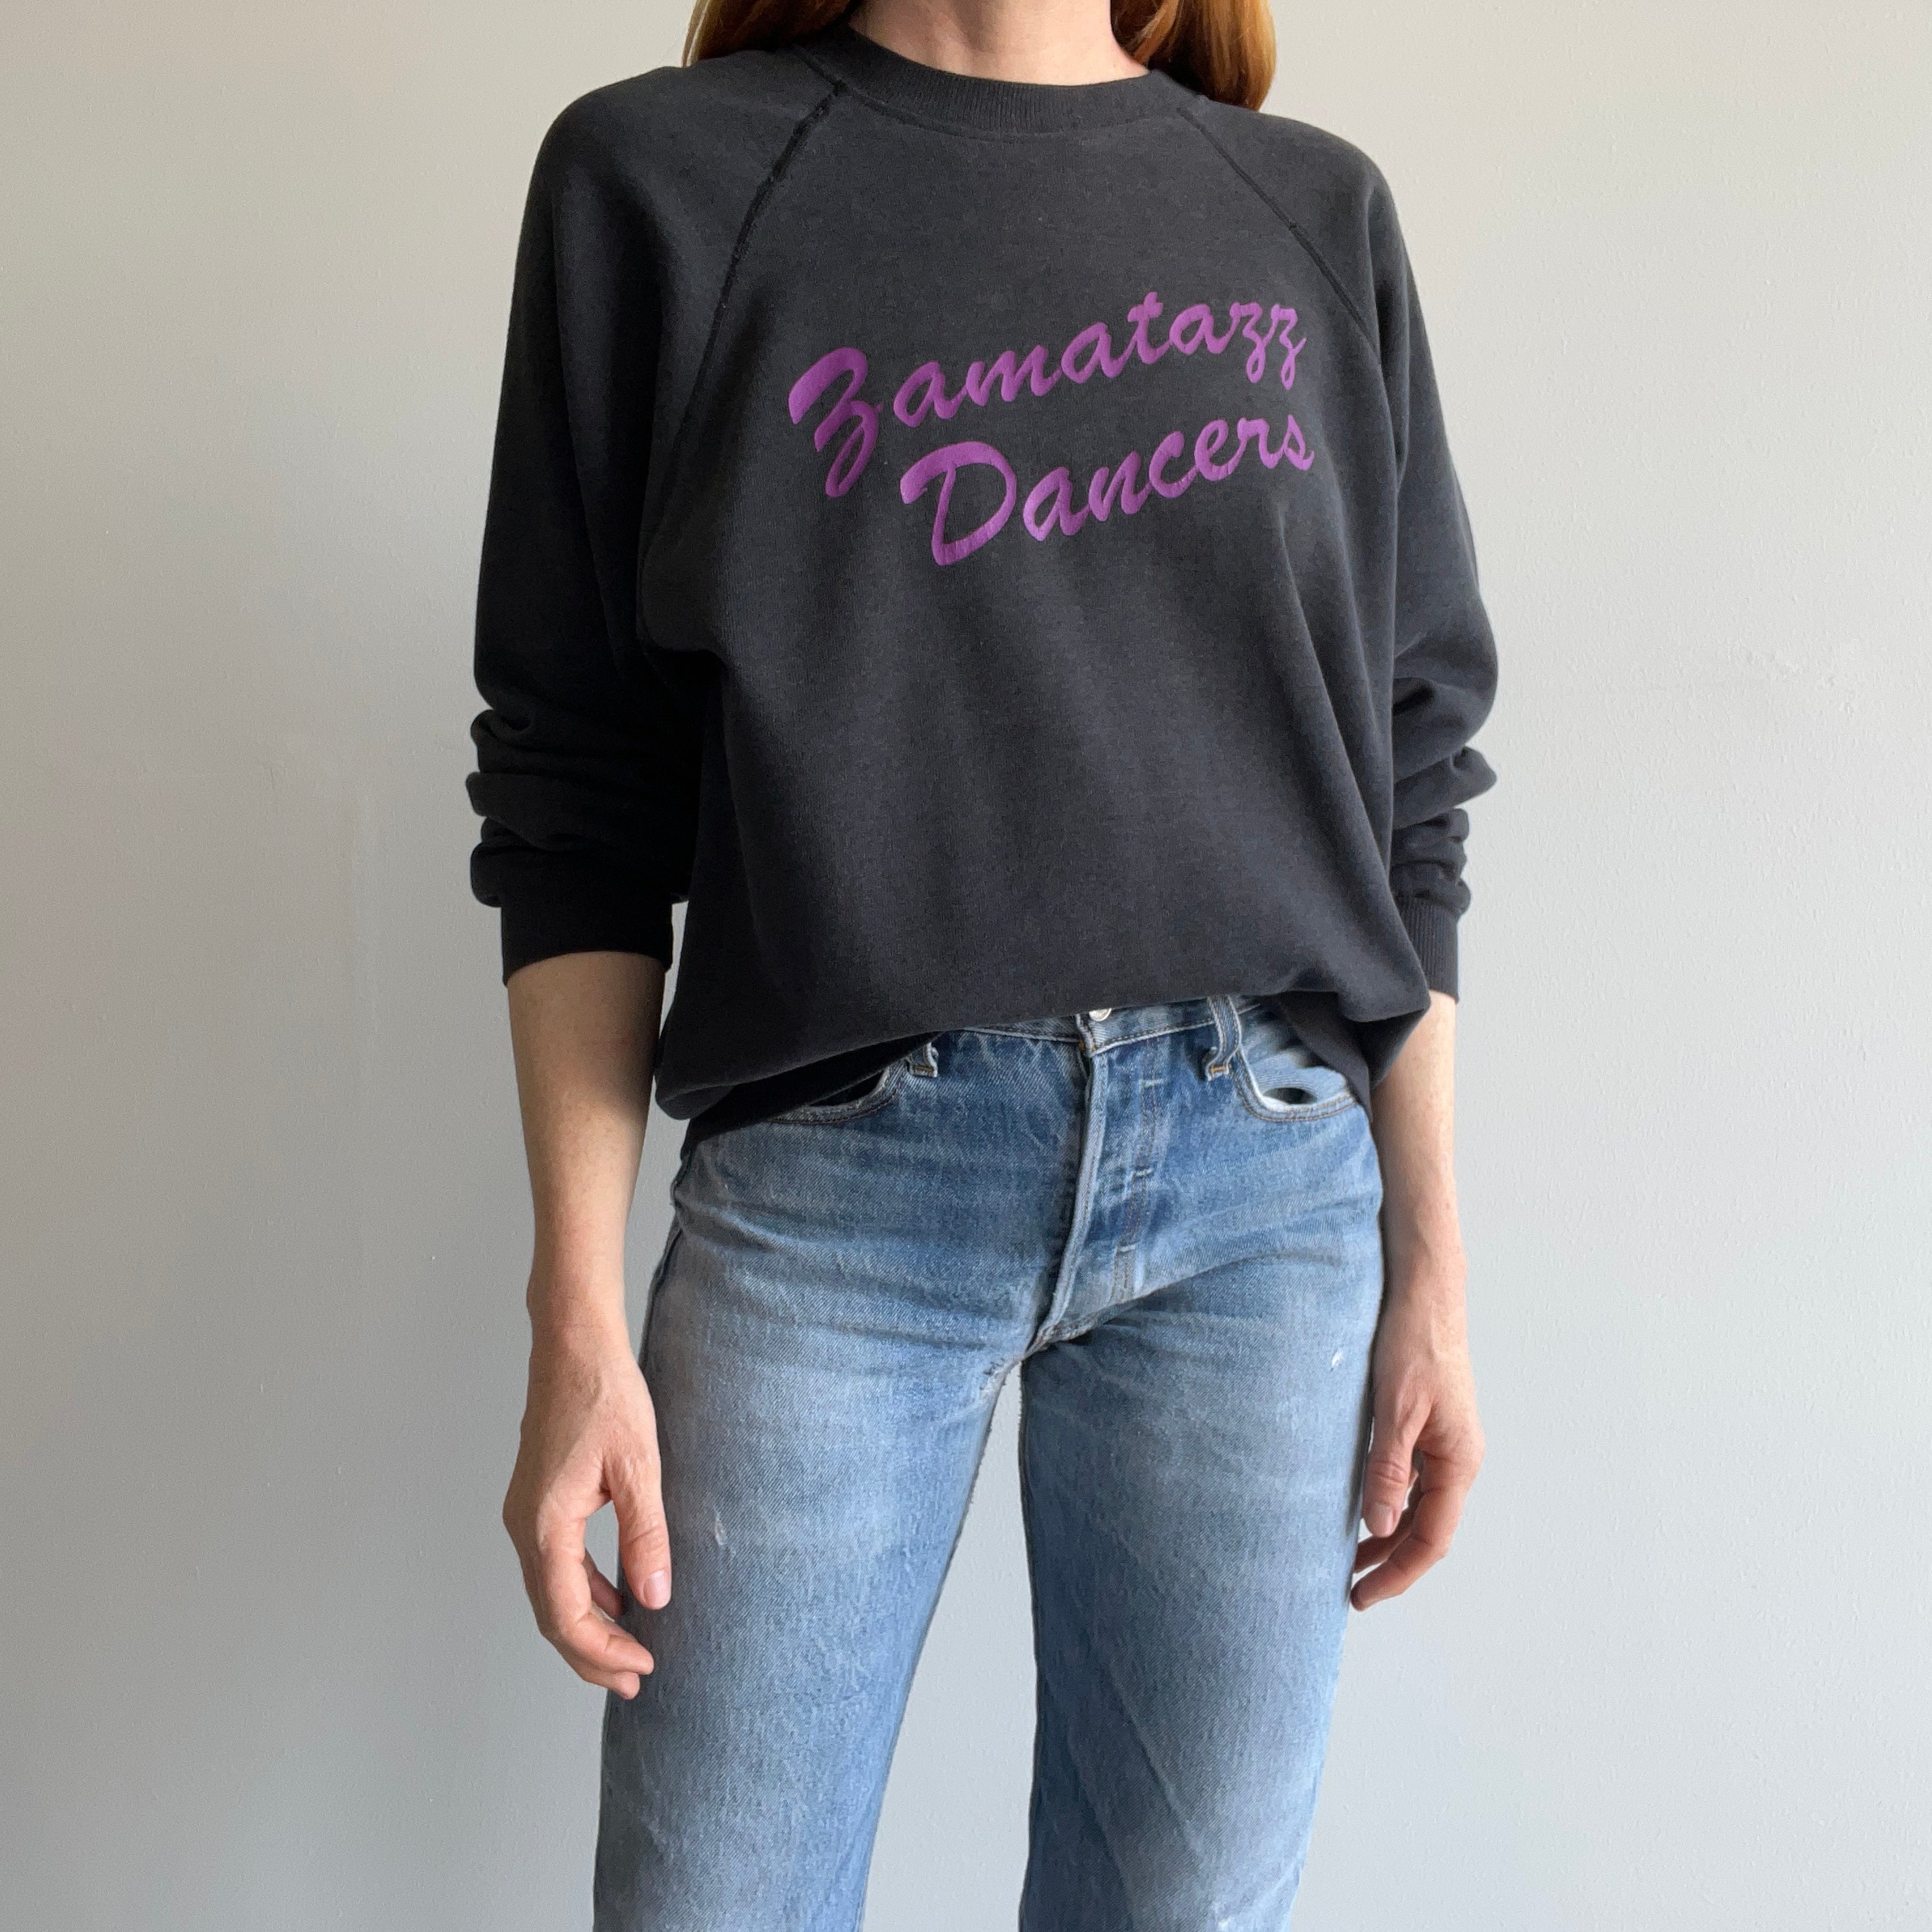 1980s Zamatazz Dancers Sweatshirt